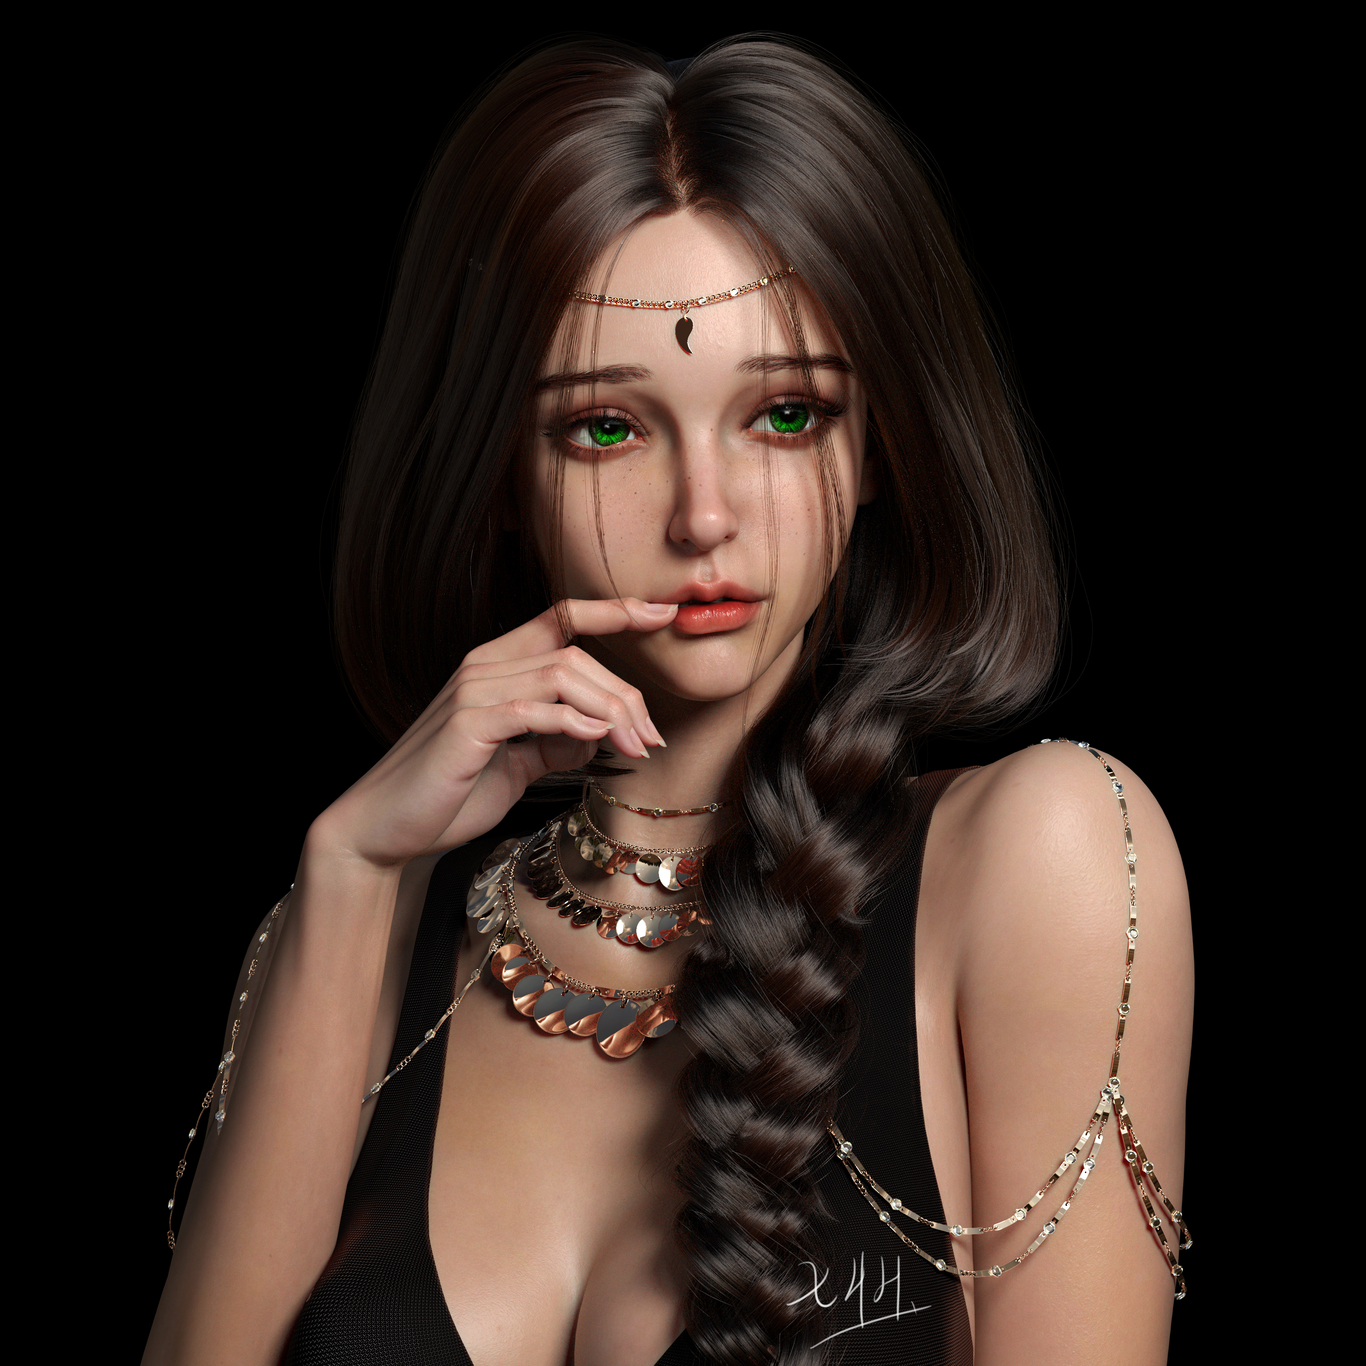 General 1366x1366 CGI digital art long hair fantasy girl black background braids WLOP